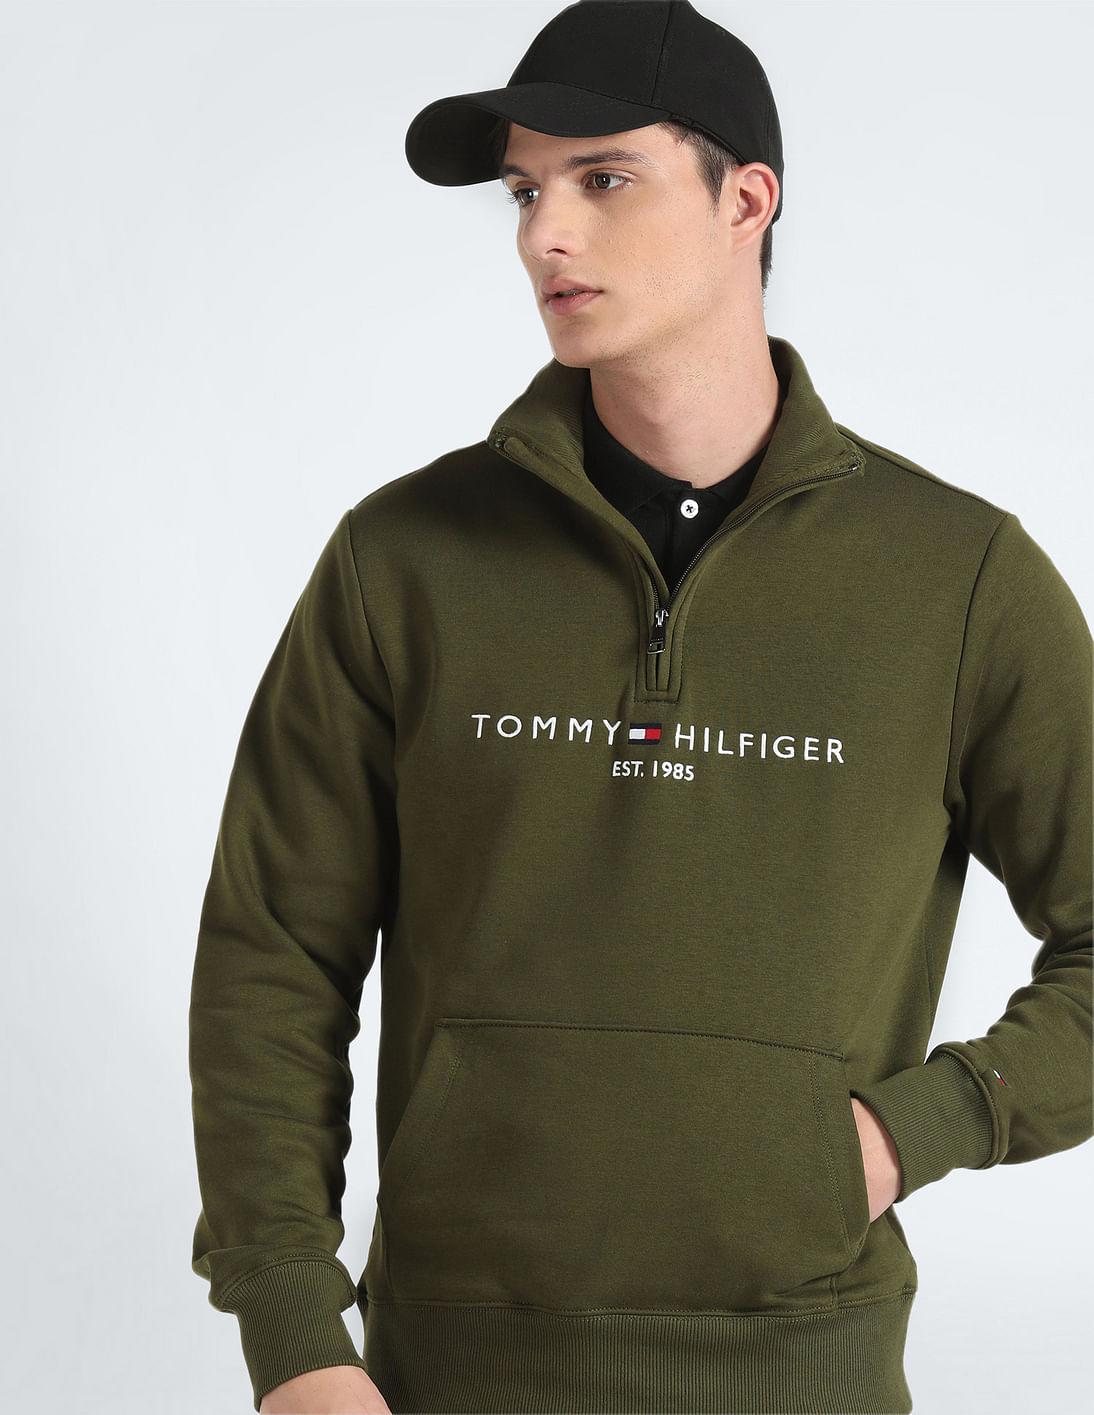 Buy Tommy Hilfiger High Neck Embroidered Sweatshirt - NNNOW.com